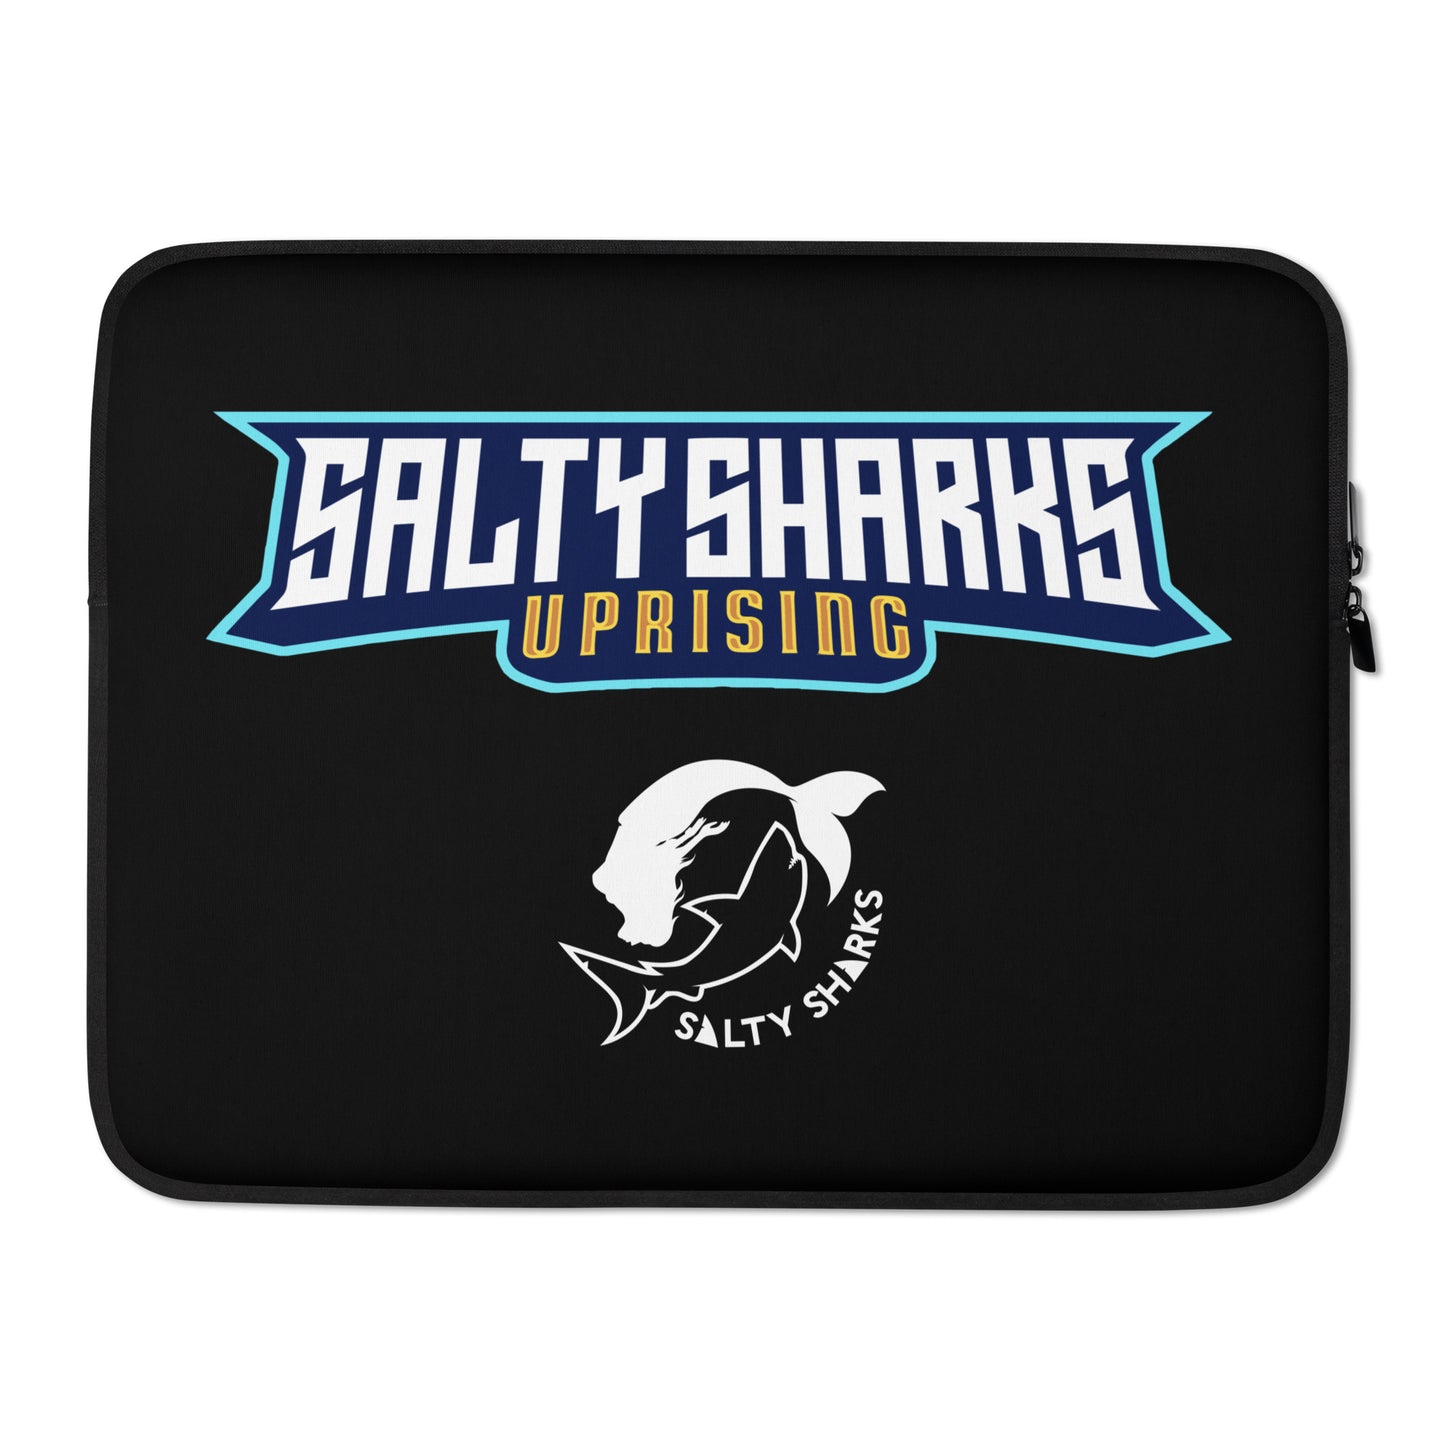 SSU Salty Sharks Uprising White Logo Laptop Sleeve